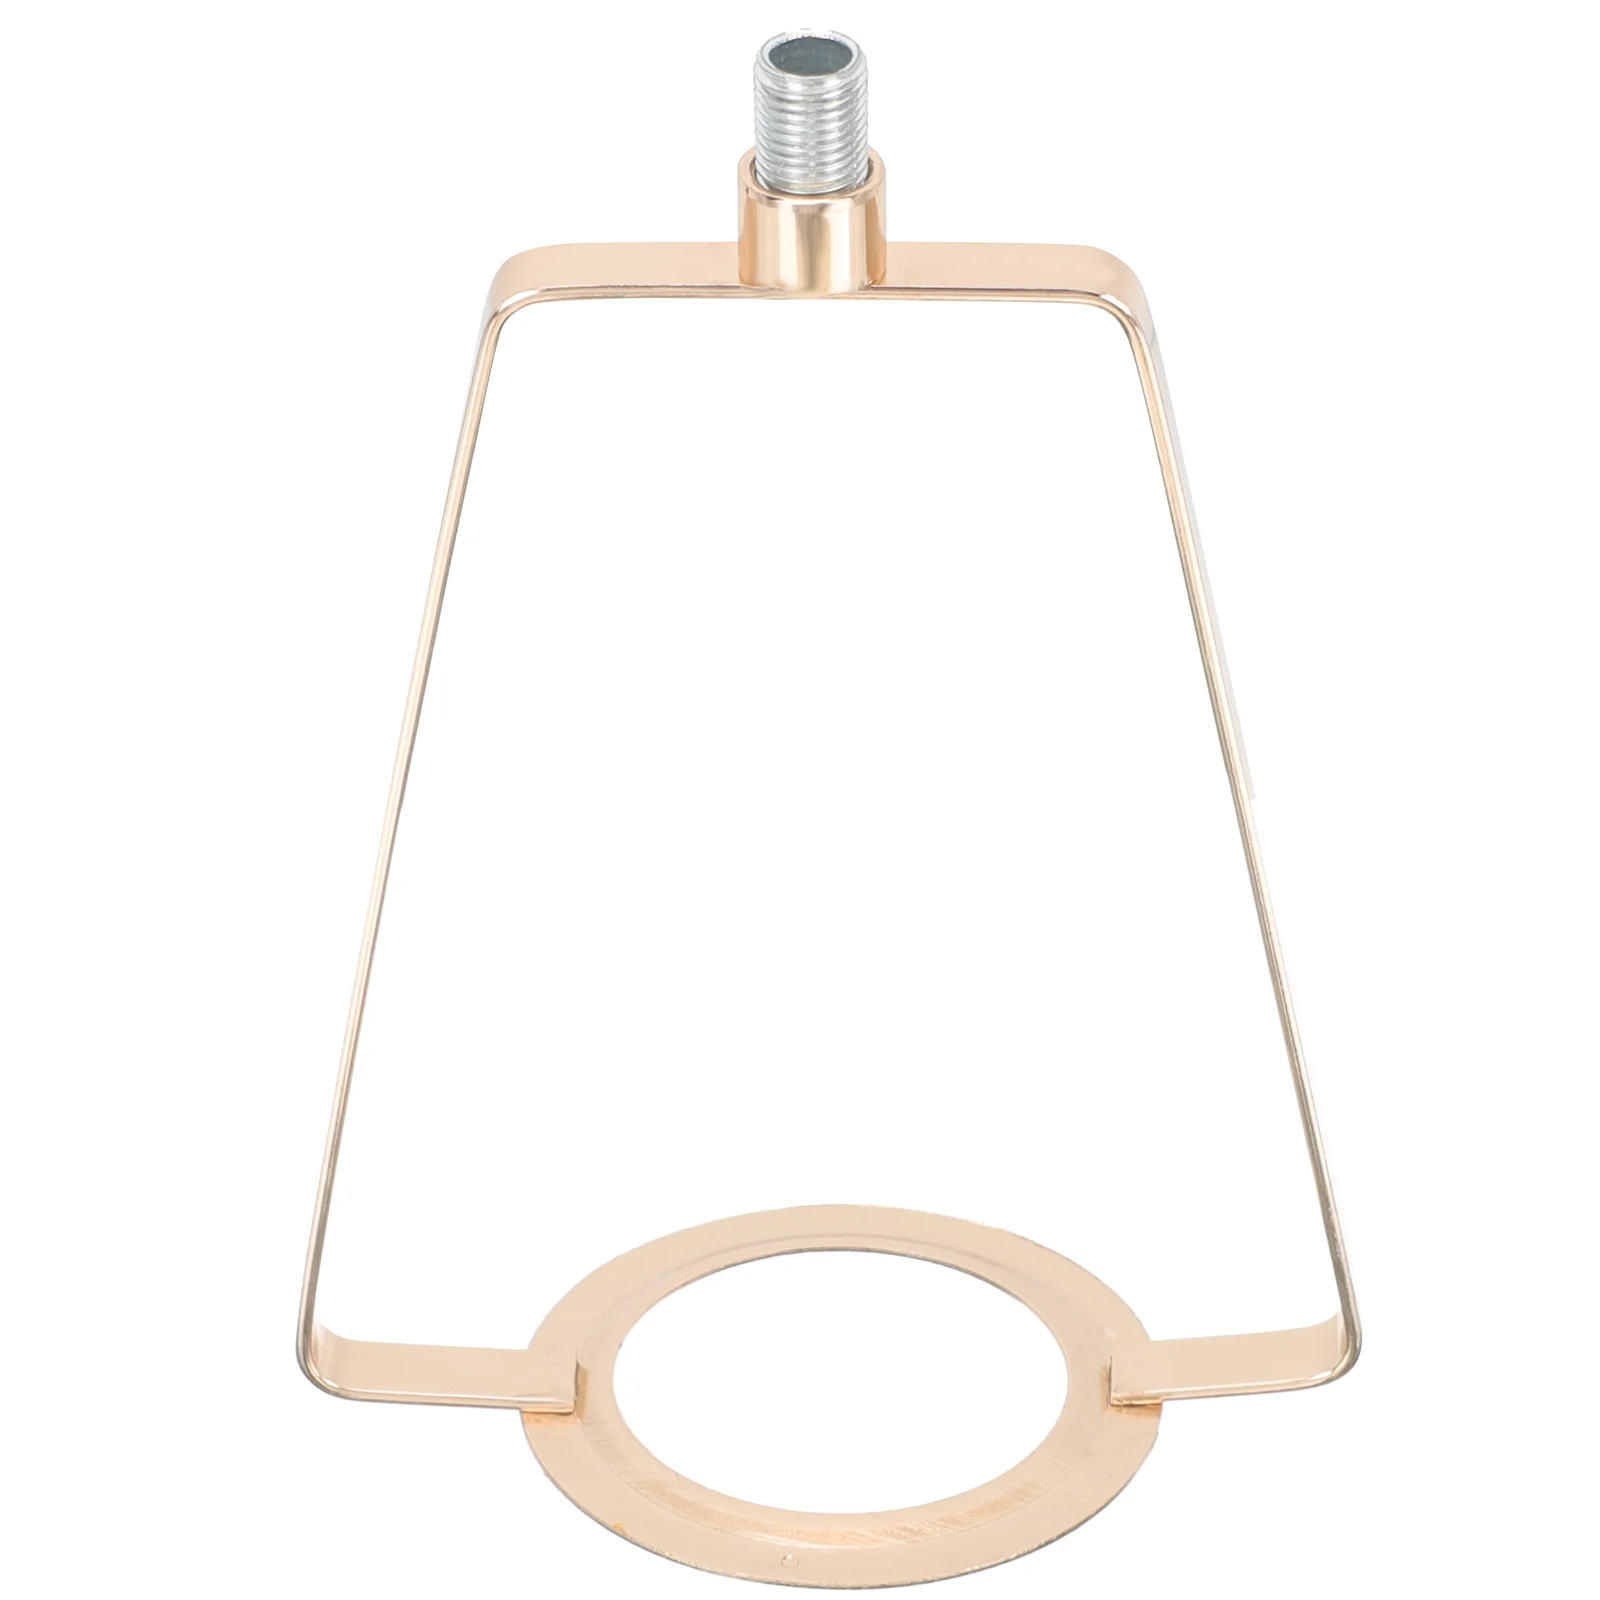 Lamp Harp Metal Lamp Shade Frame Lamp Shade Adapter Diy Lighting Accessory